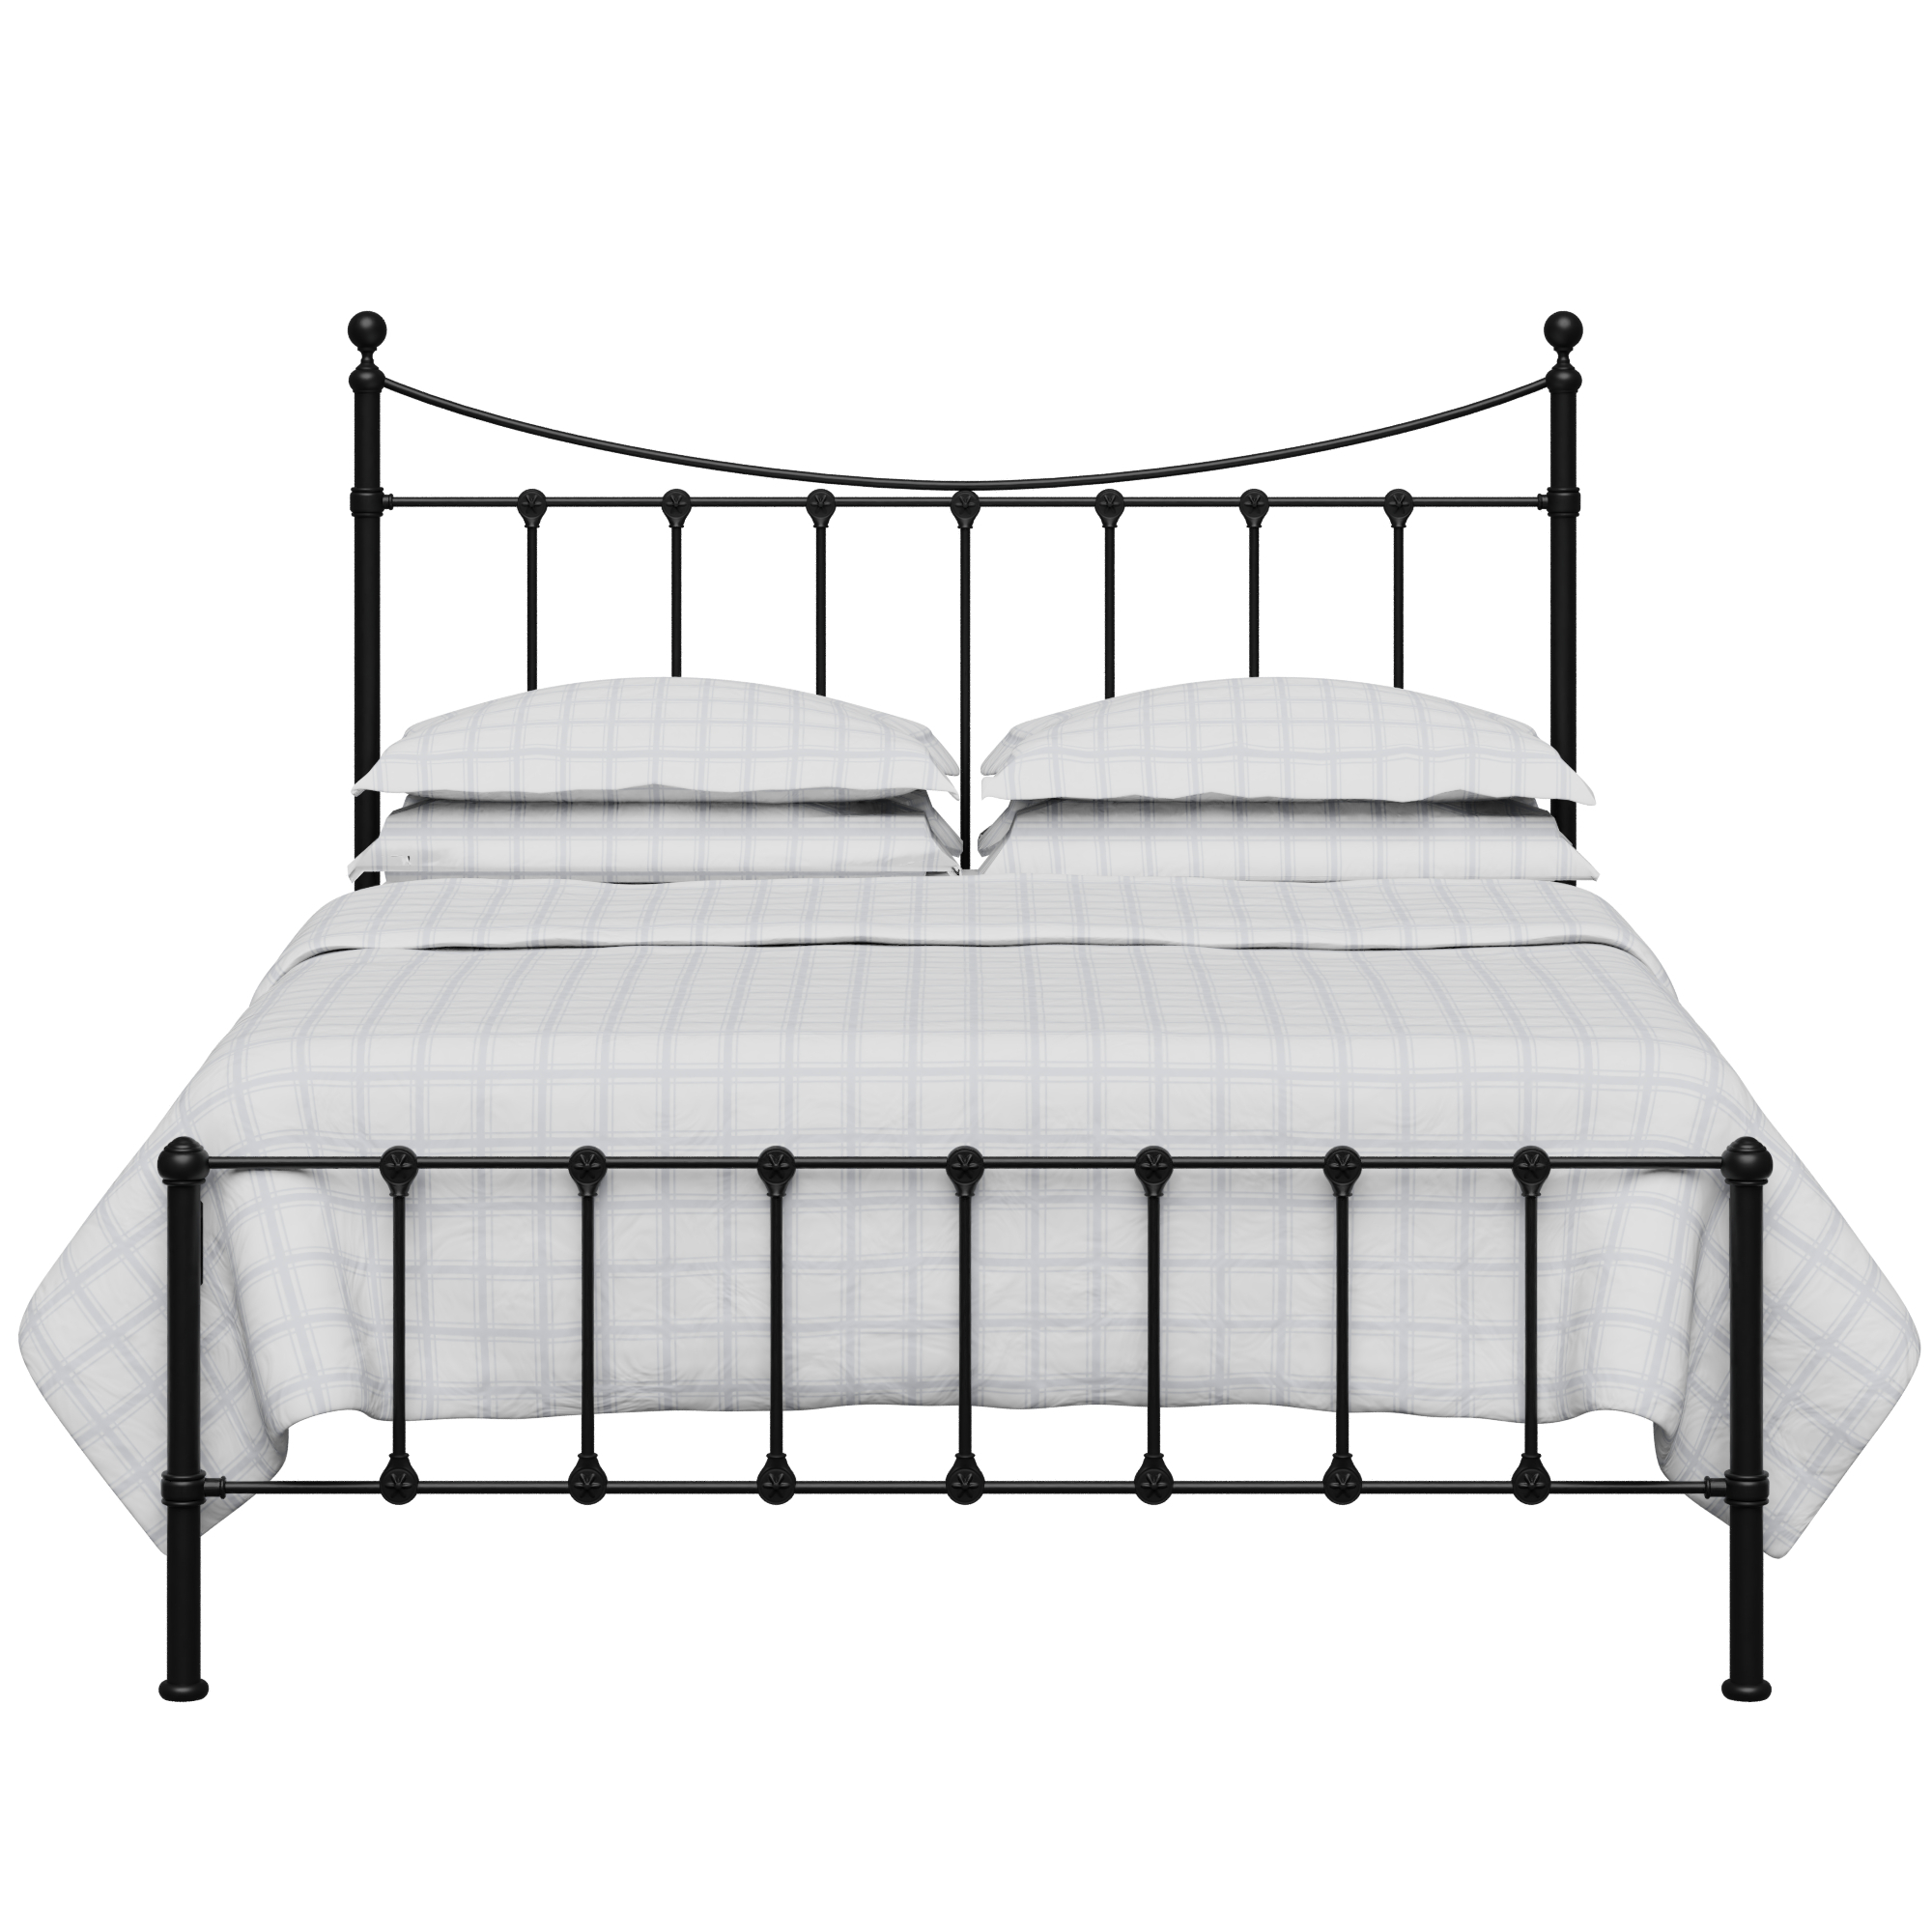 Olivia iron/metal bed in black